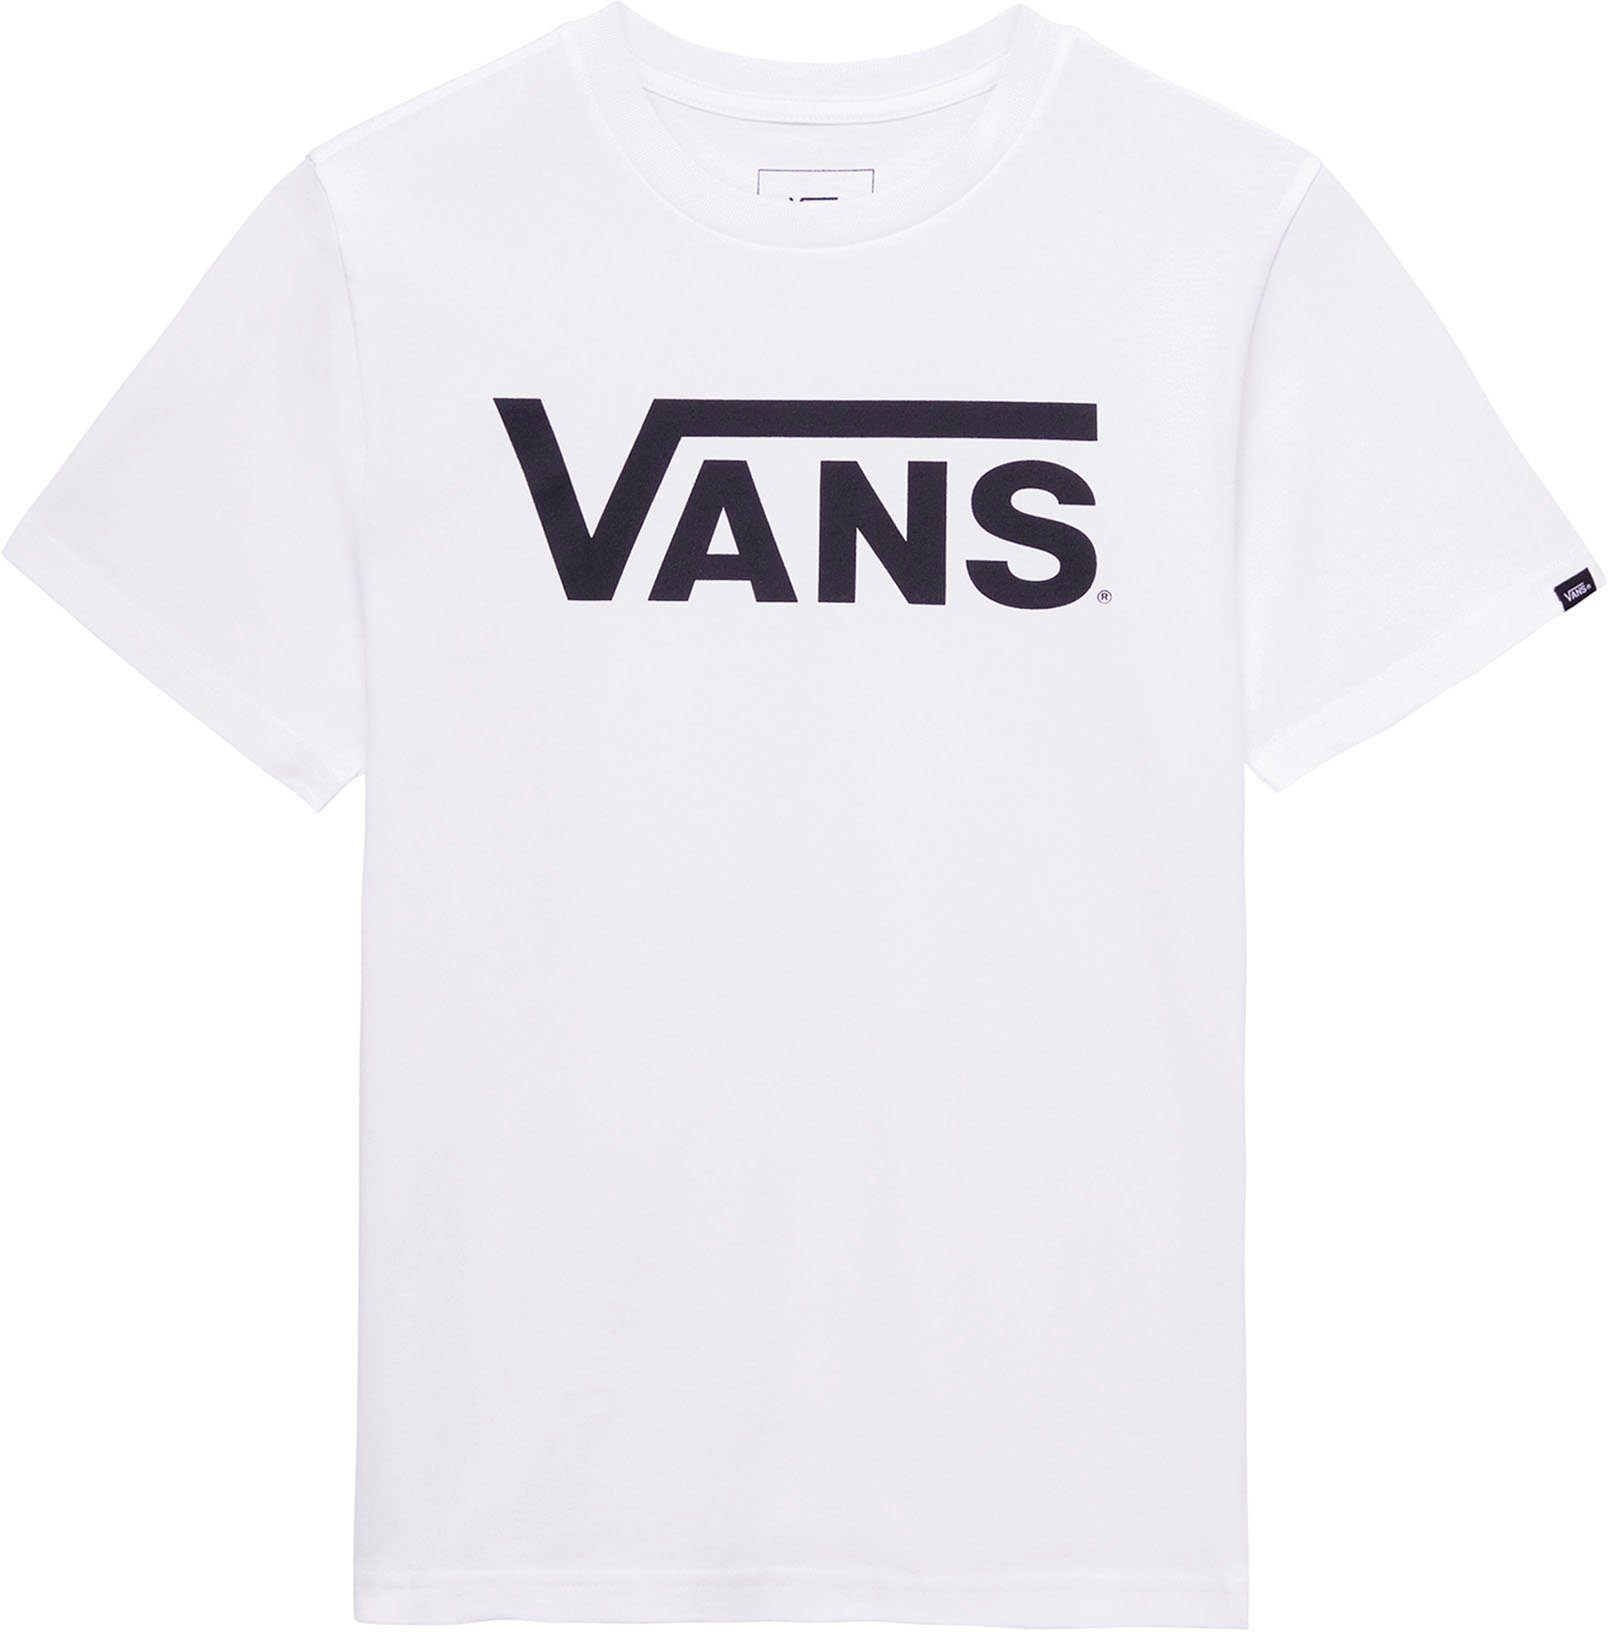 Vans T-Shirt CLASSIC VANS weiß BOYS